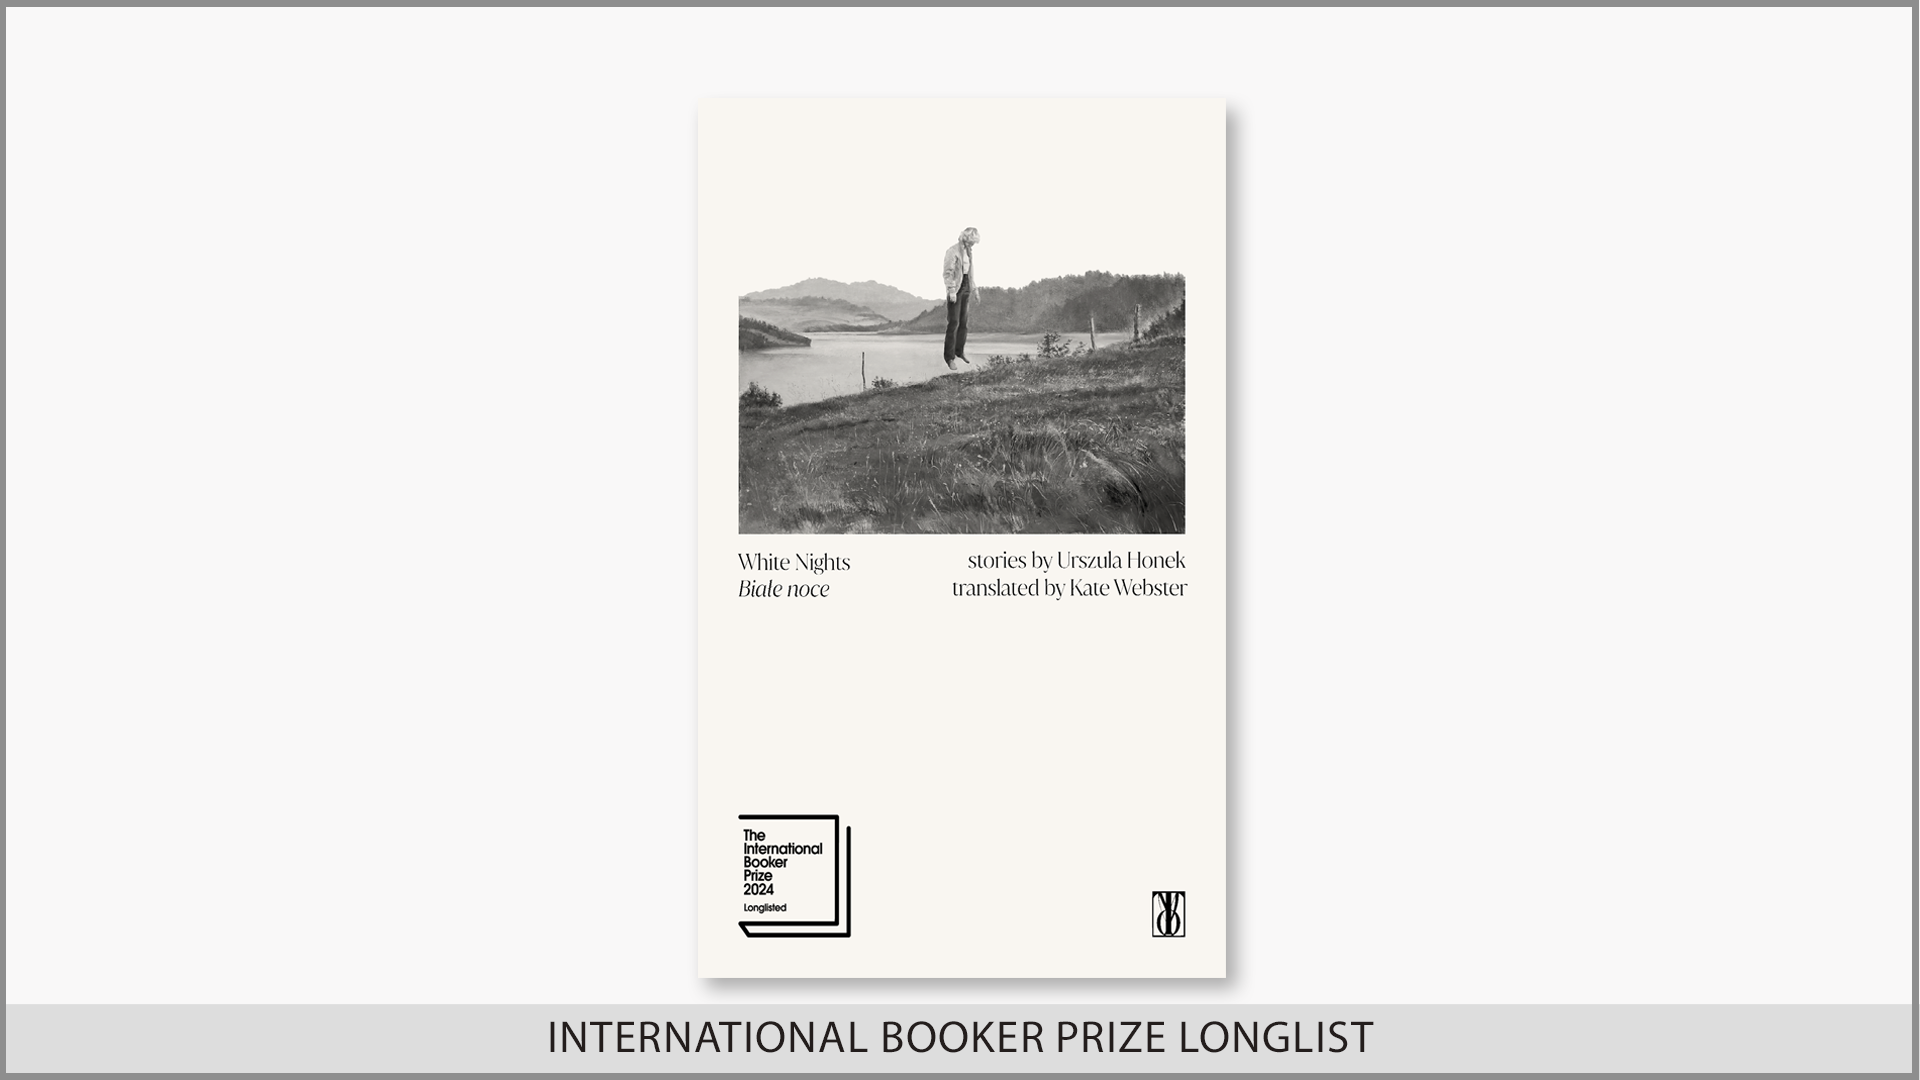 Beitrag zu Urszula Honek’s <em>White Nights</em> Longlisted for the International Booker Prize